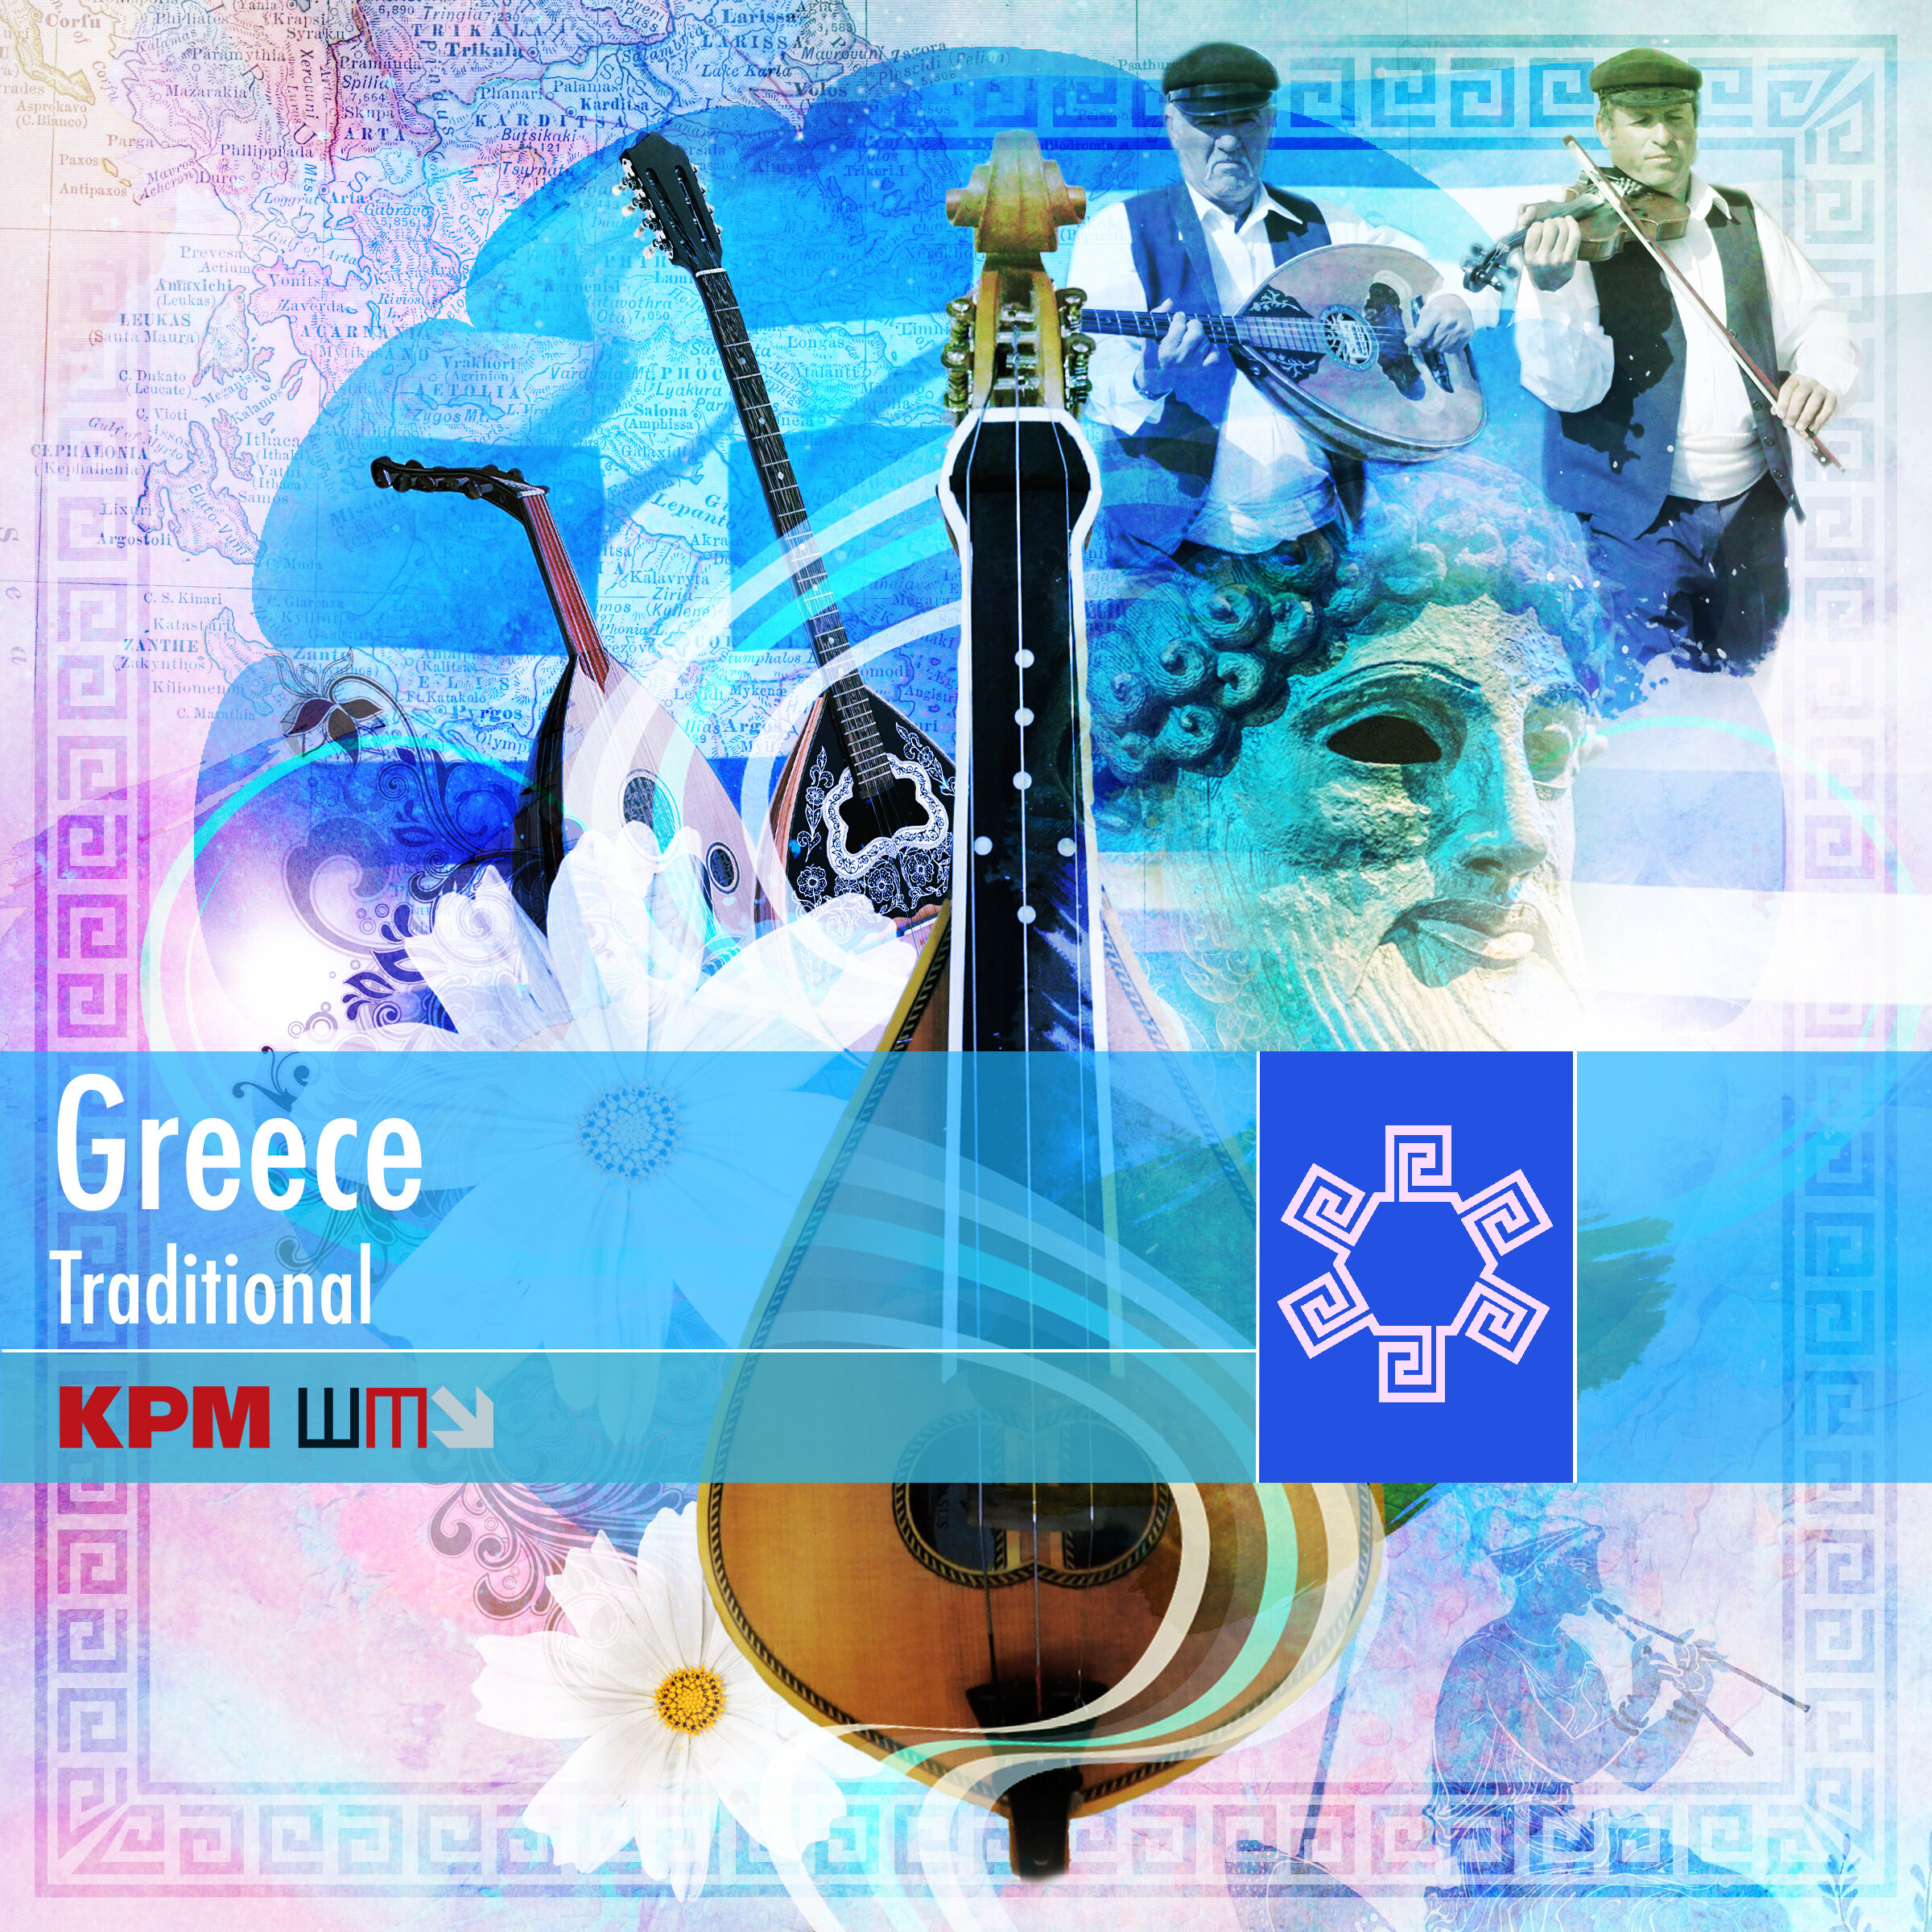 Greece Traditional album